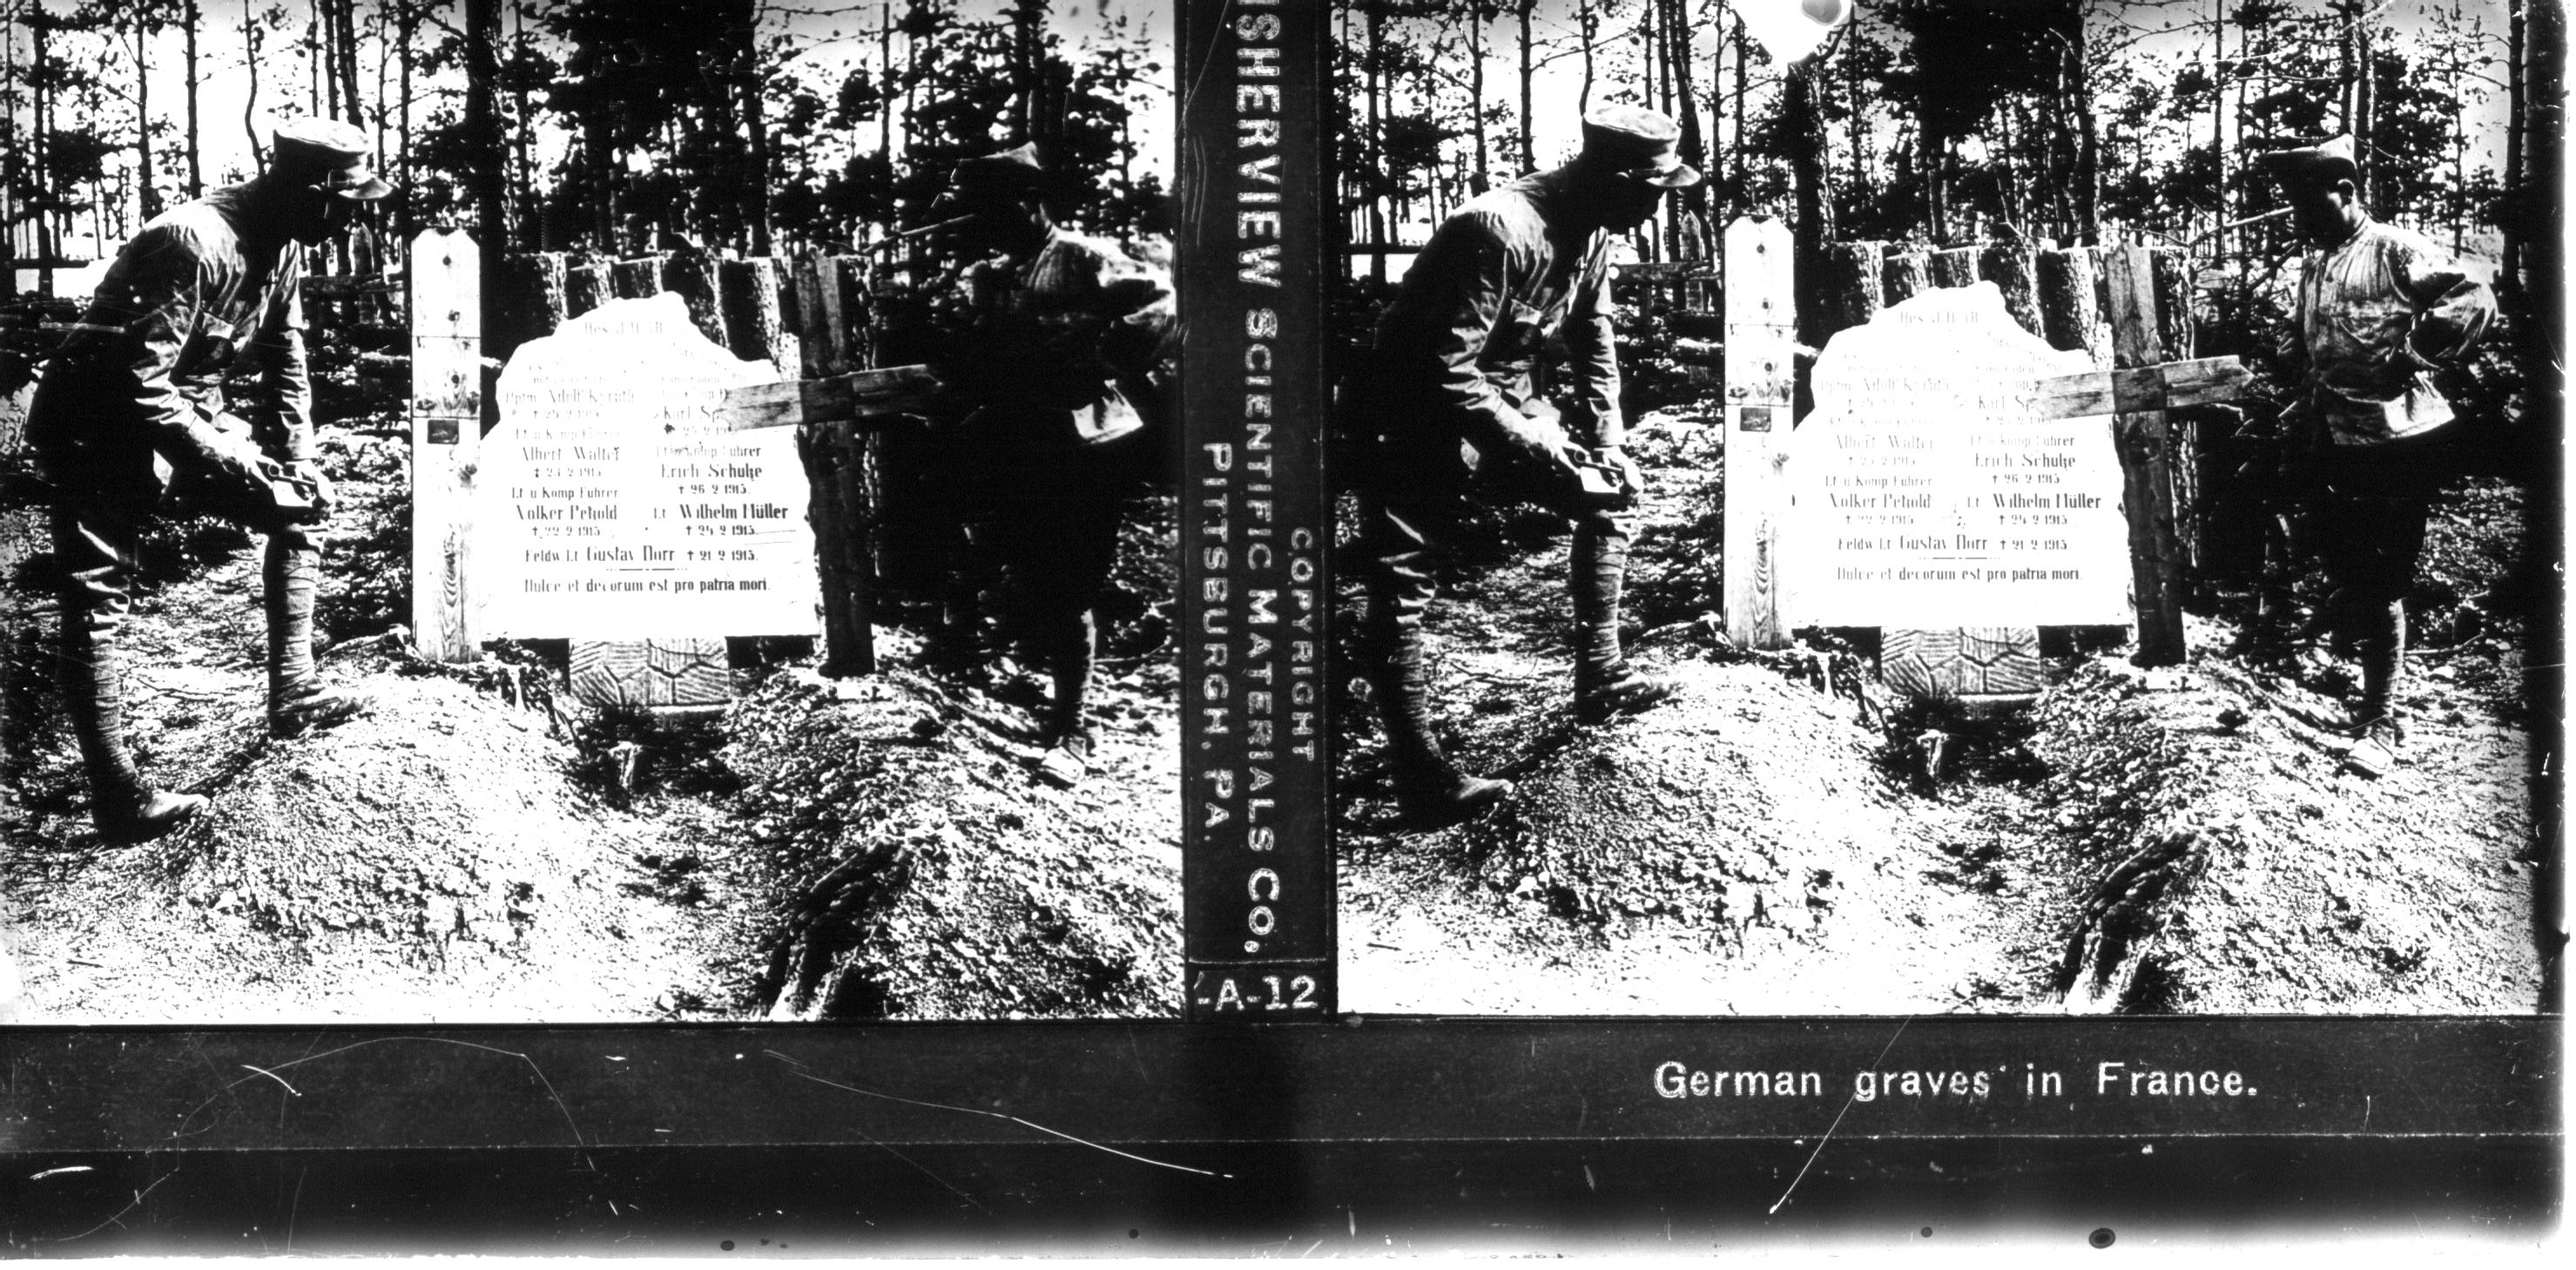 German graves in France